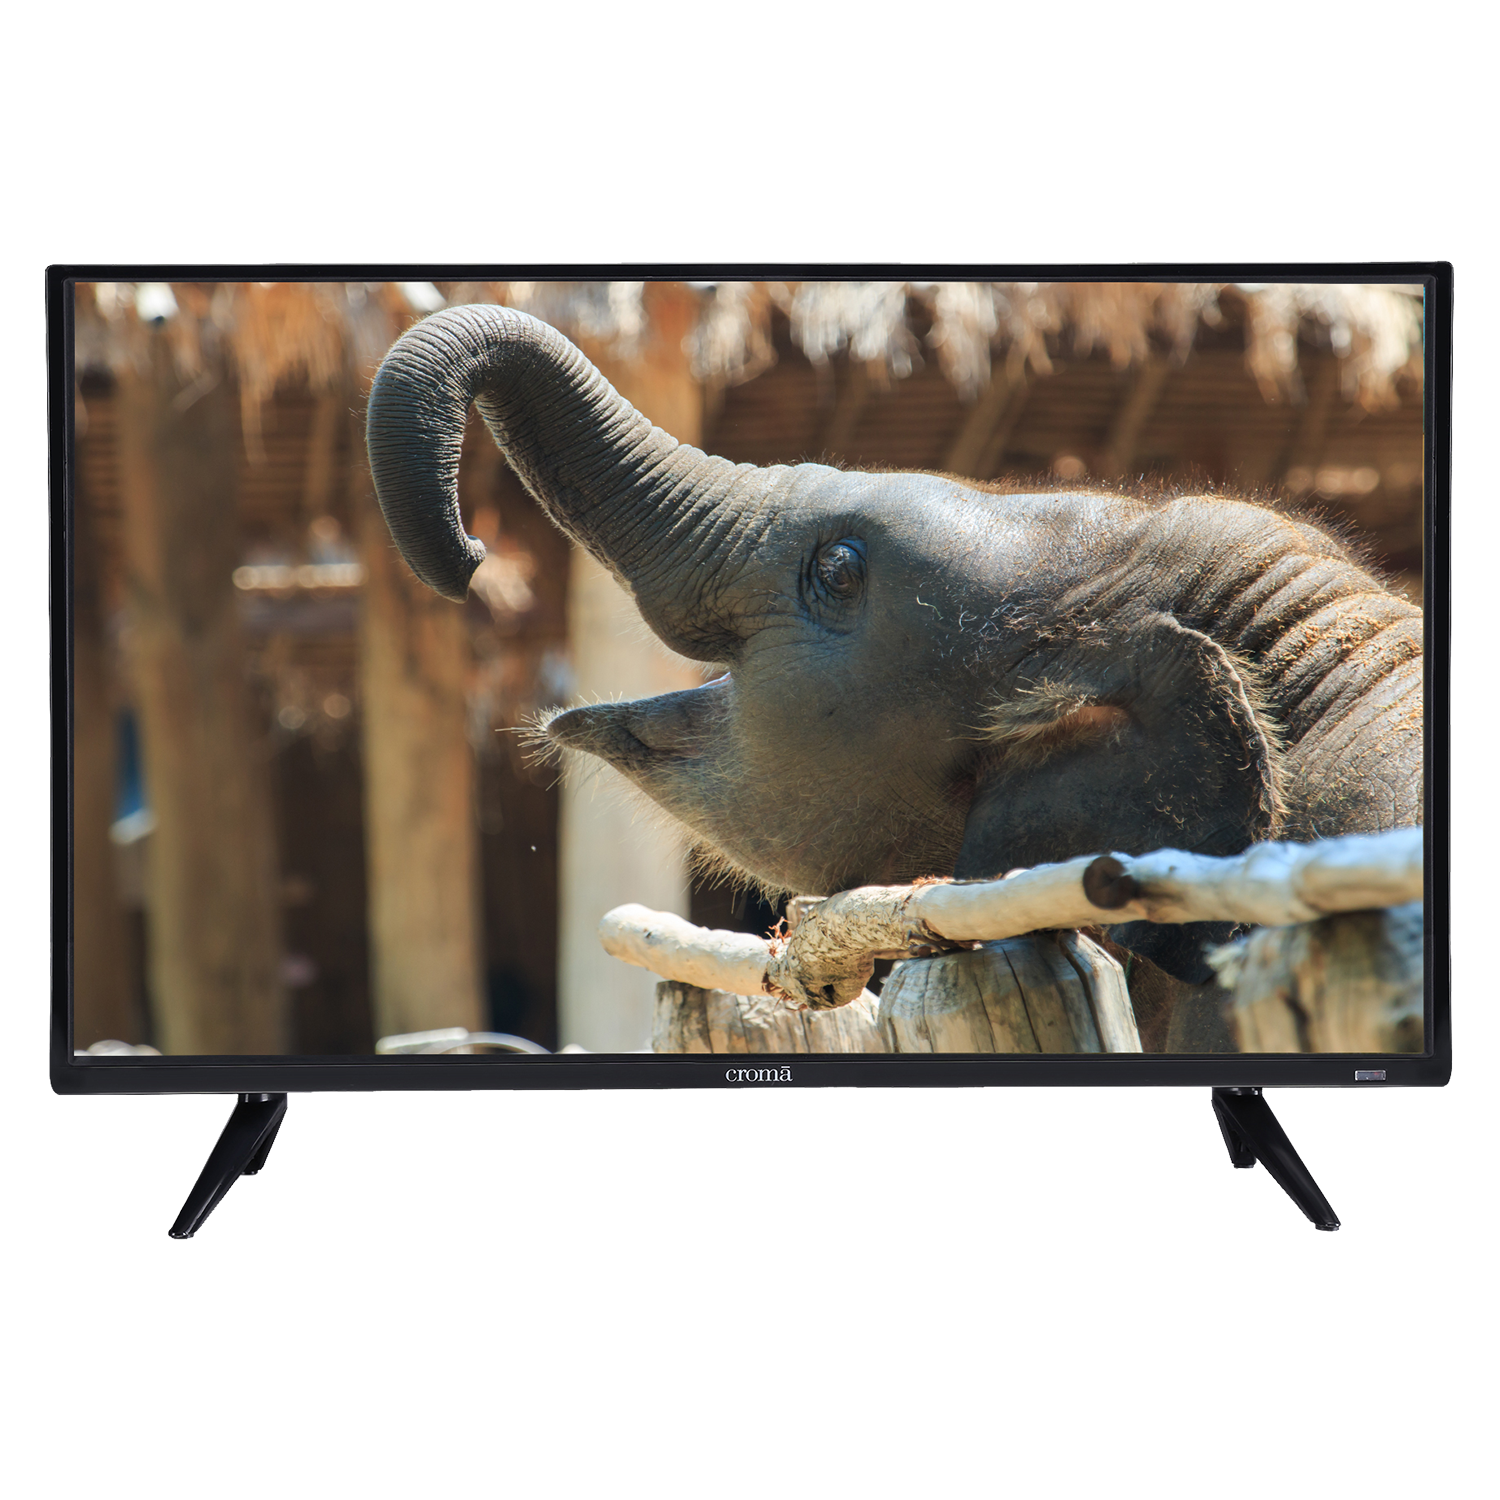 Croma 81.28 cm (32 inch) HD Ready Android Smart TV (Black, EL7344)_1